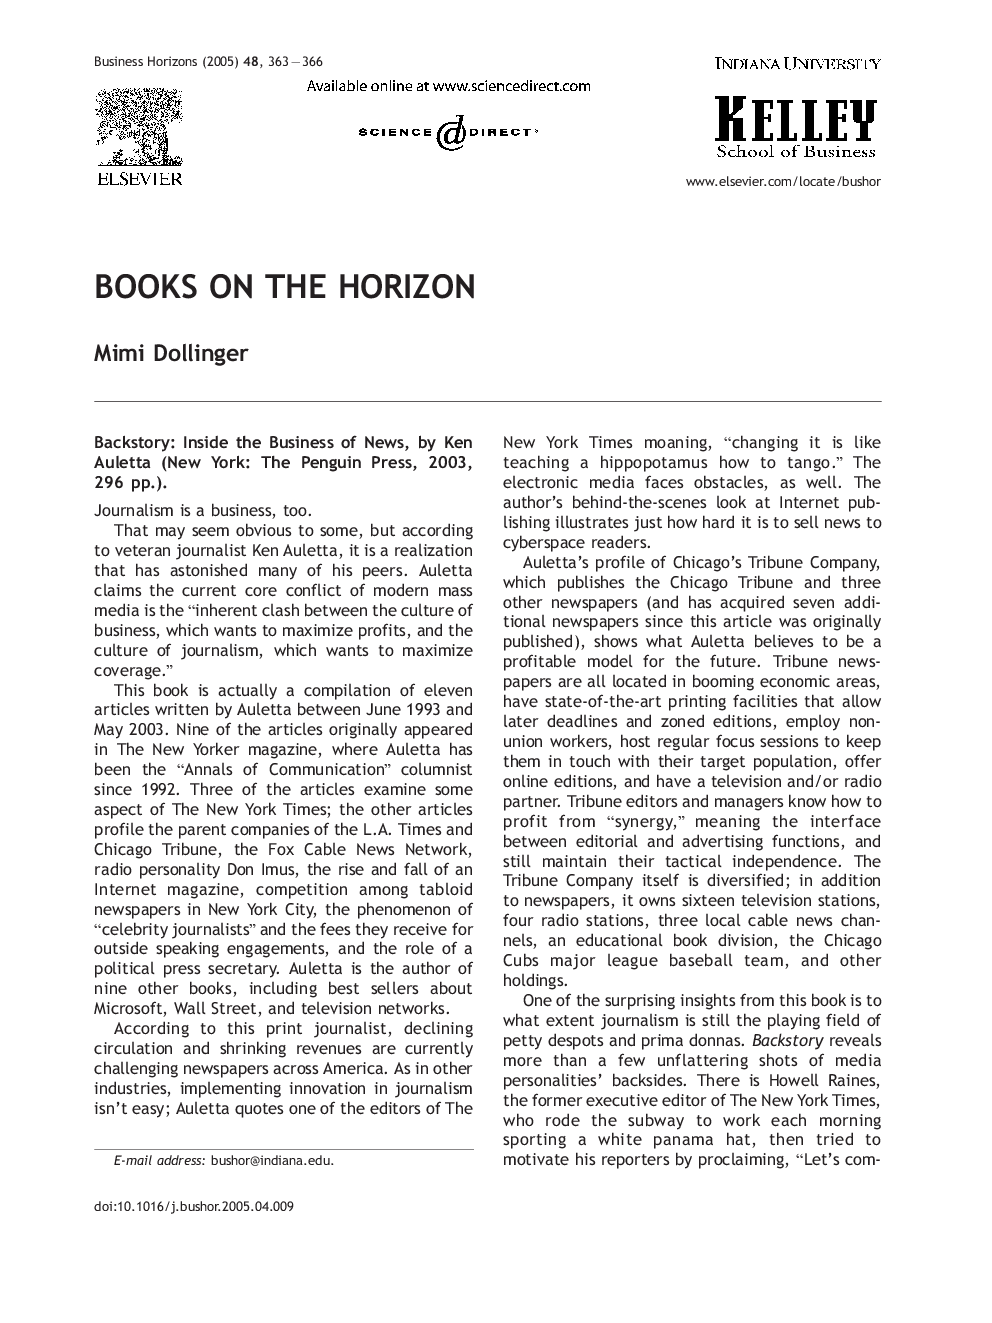 BOOKS ON THE HORIZON